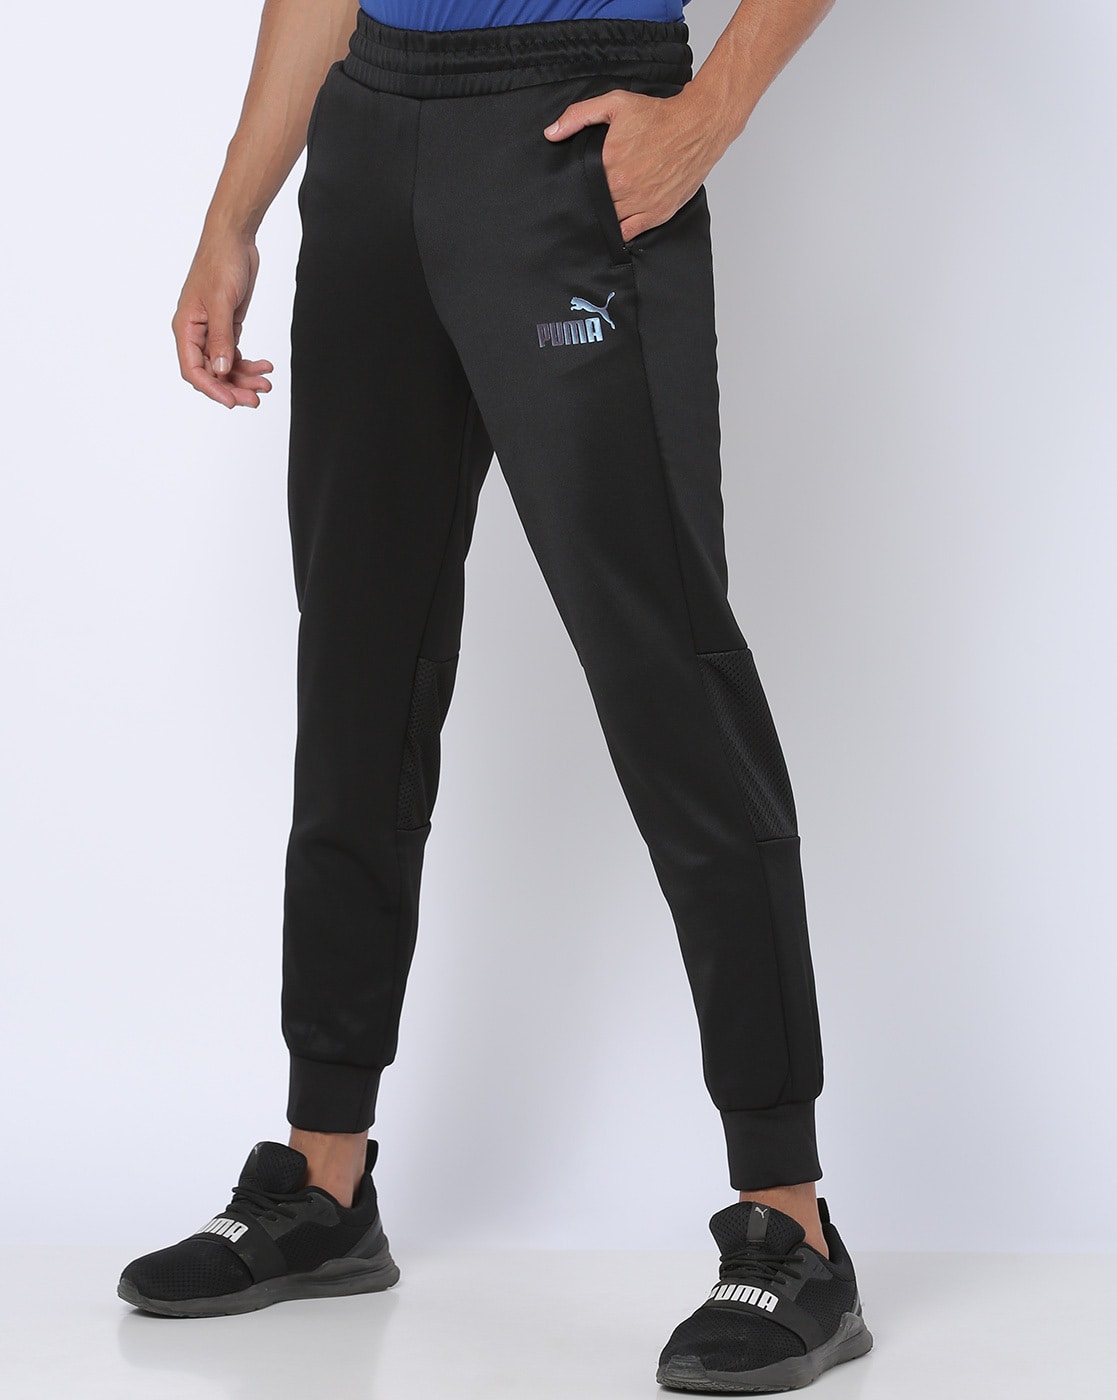 Superfit Premium Energy Pants® - High Waisted - Petite Length - Black |  High waisted, Body energy, Black